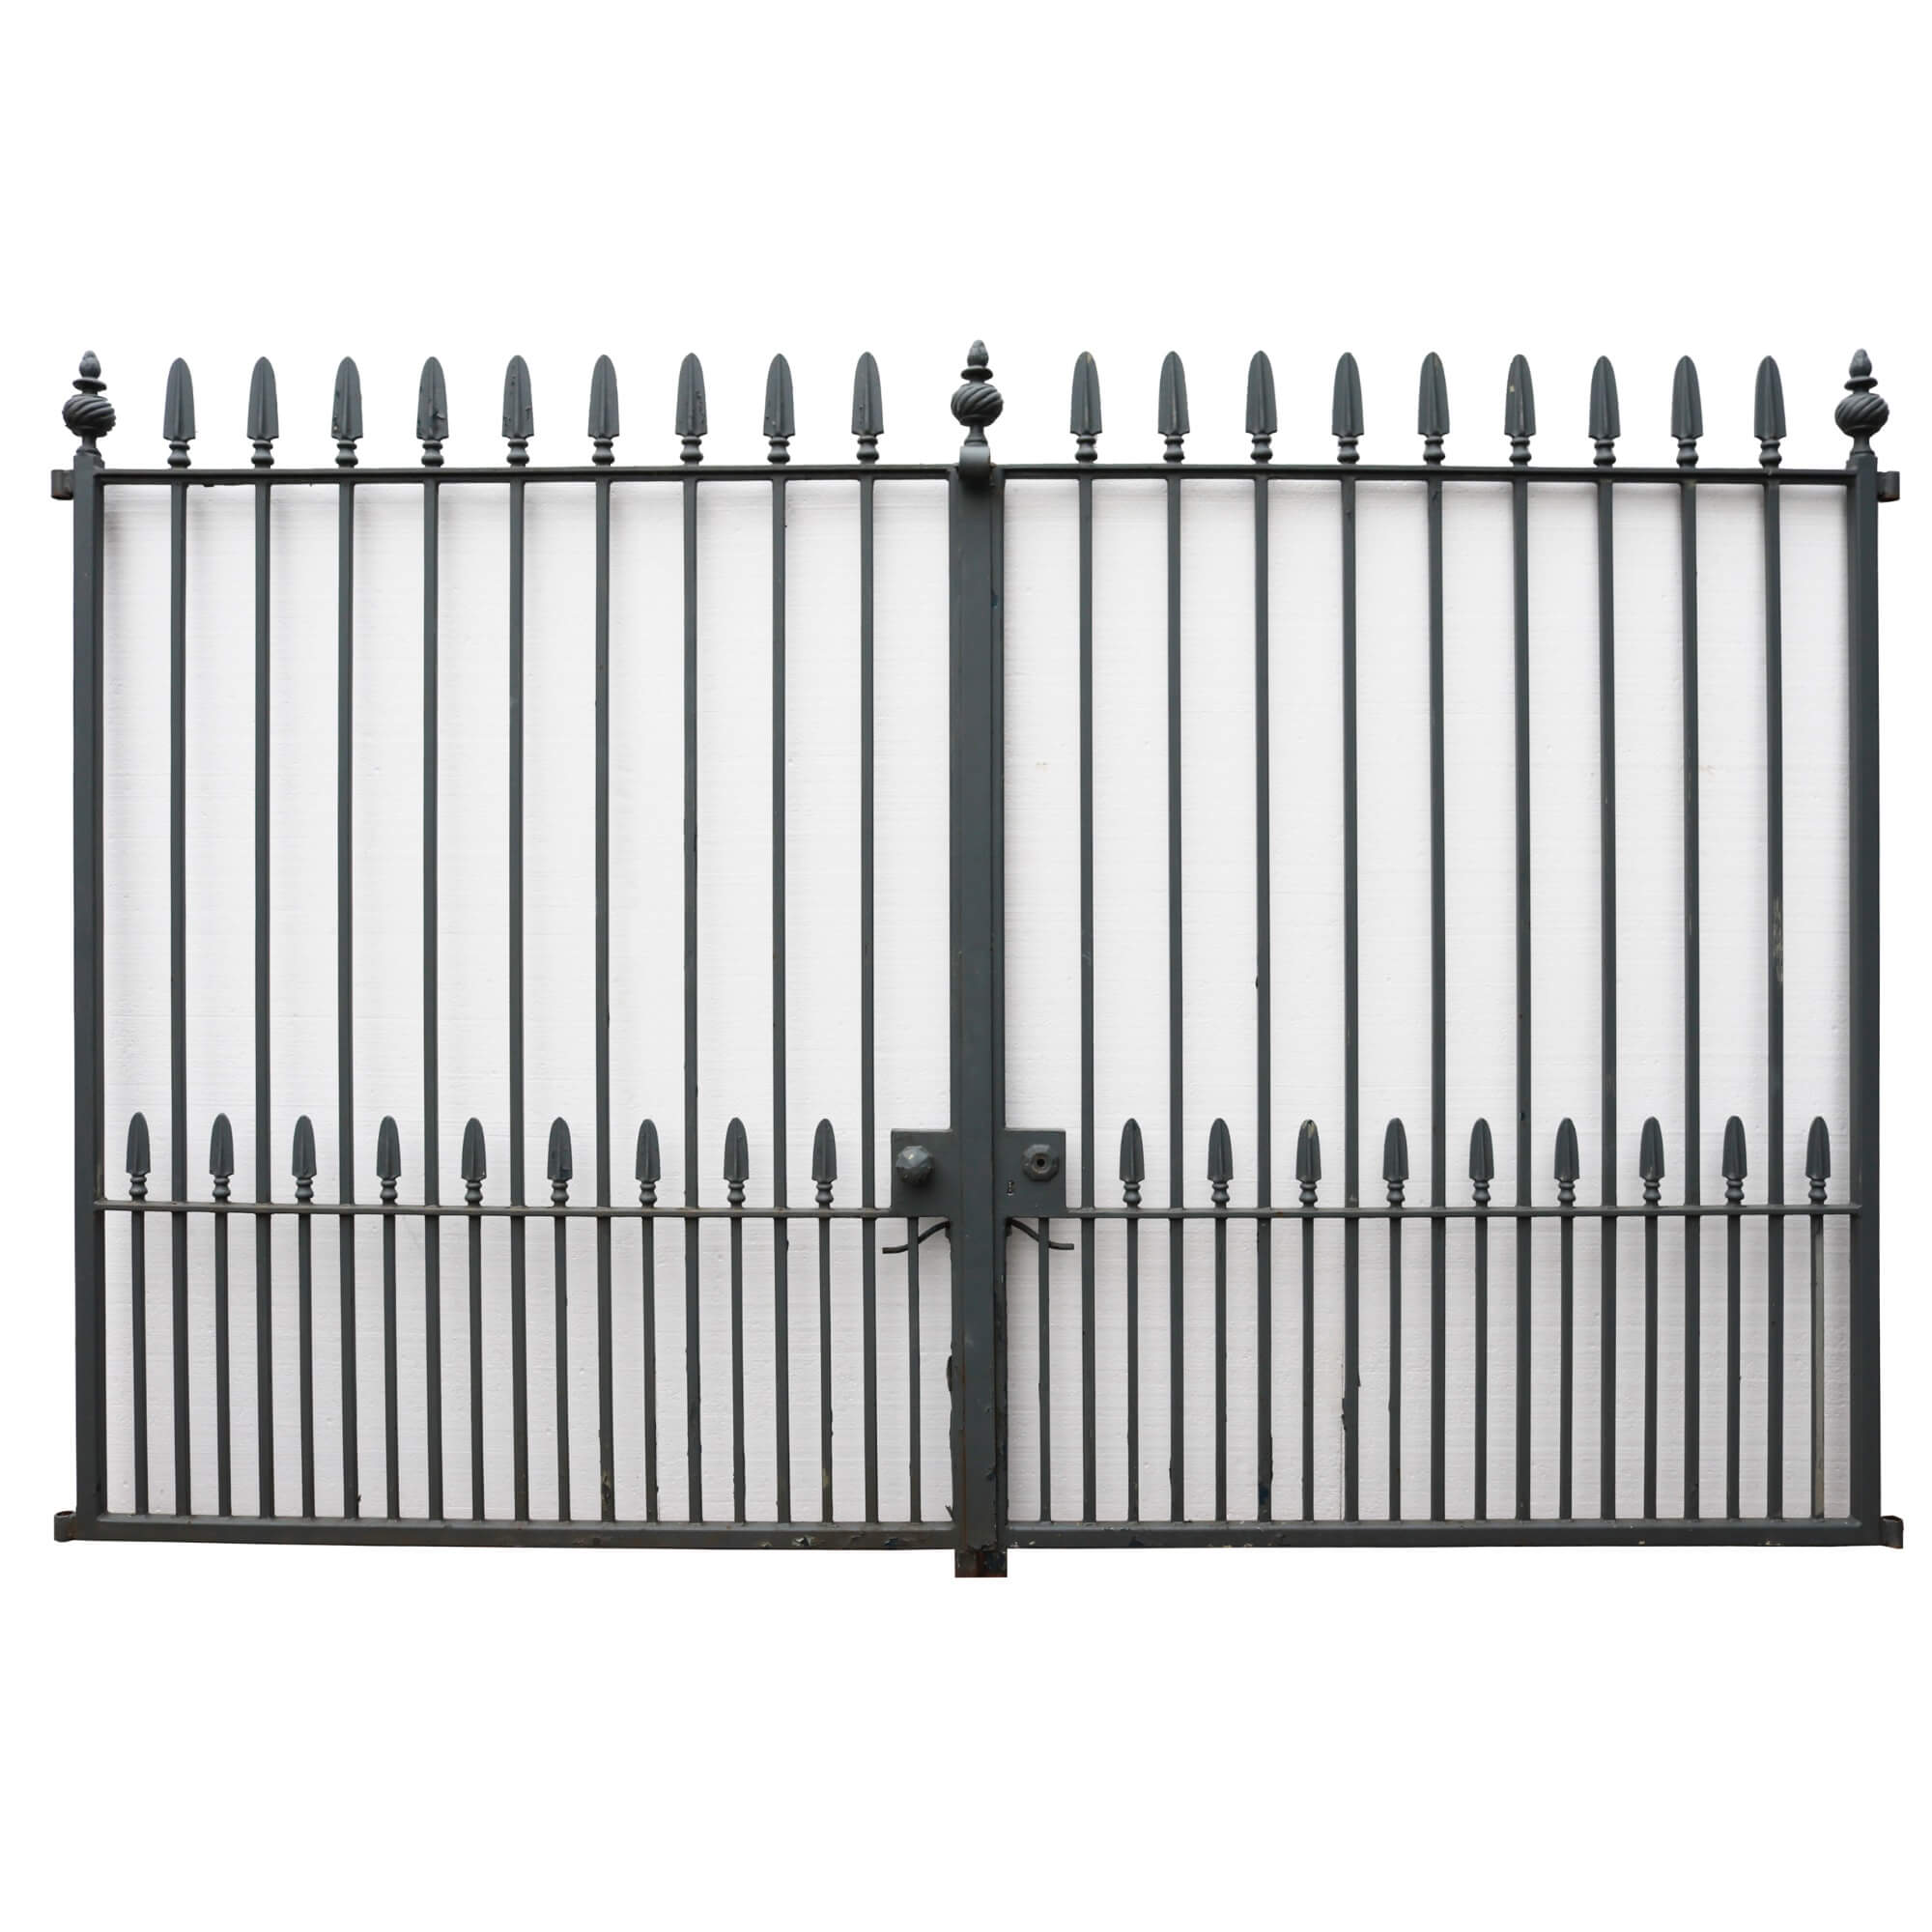 Set of Reclaimed Steel Driveway Gates 313 cm (10’3”)